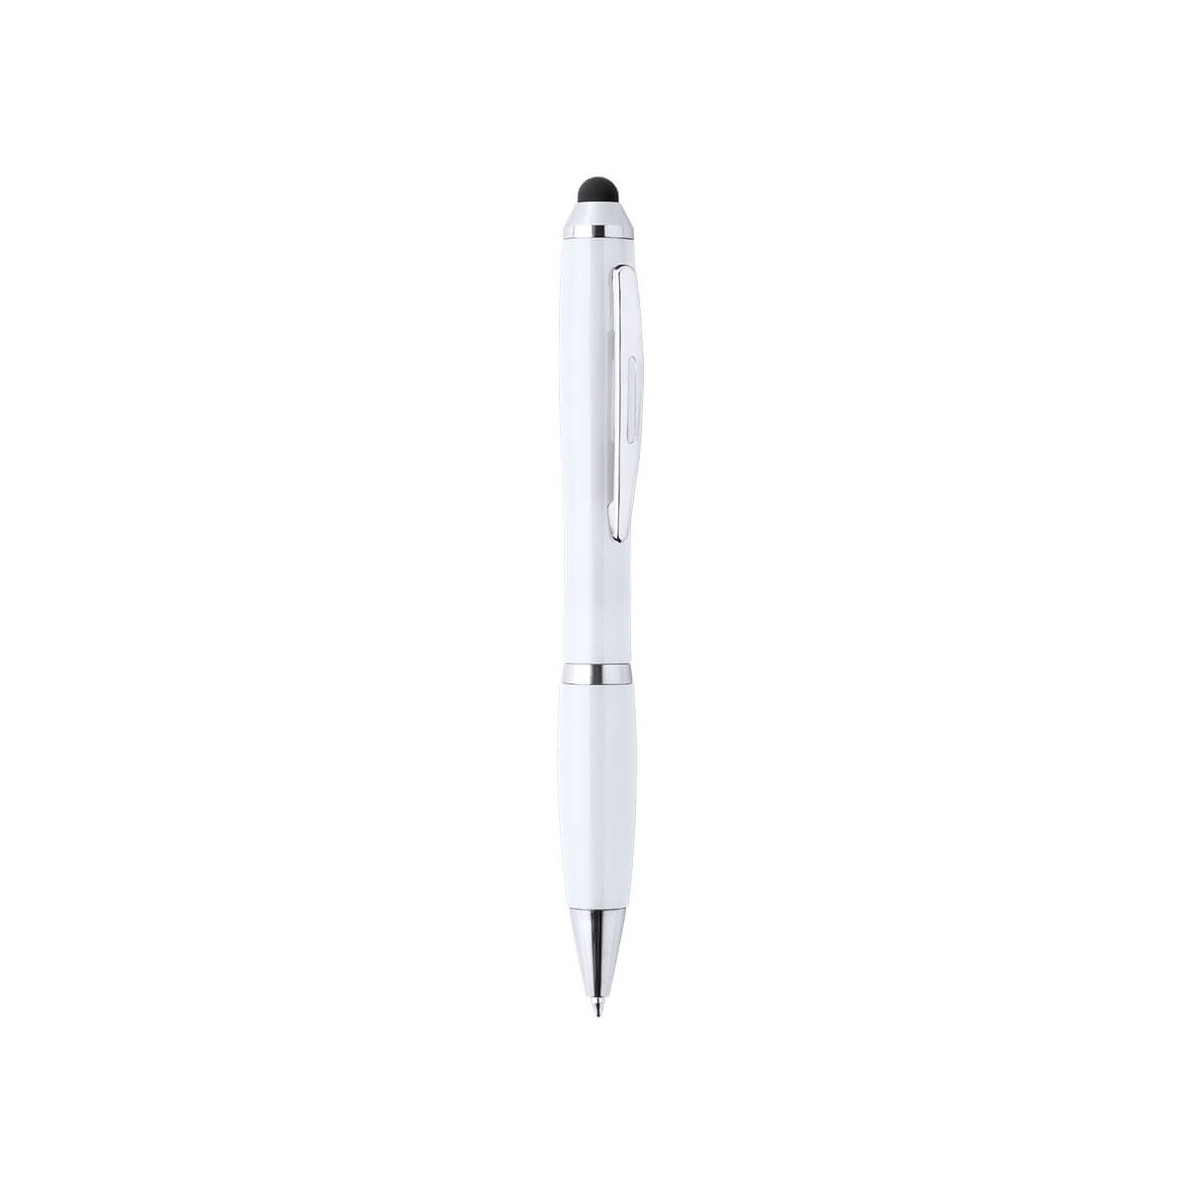 Beau stylo blanc avec pointe tactile